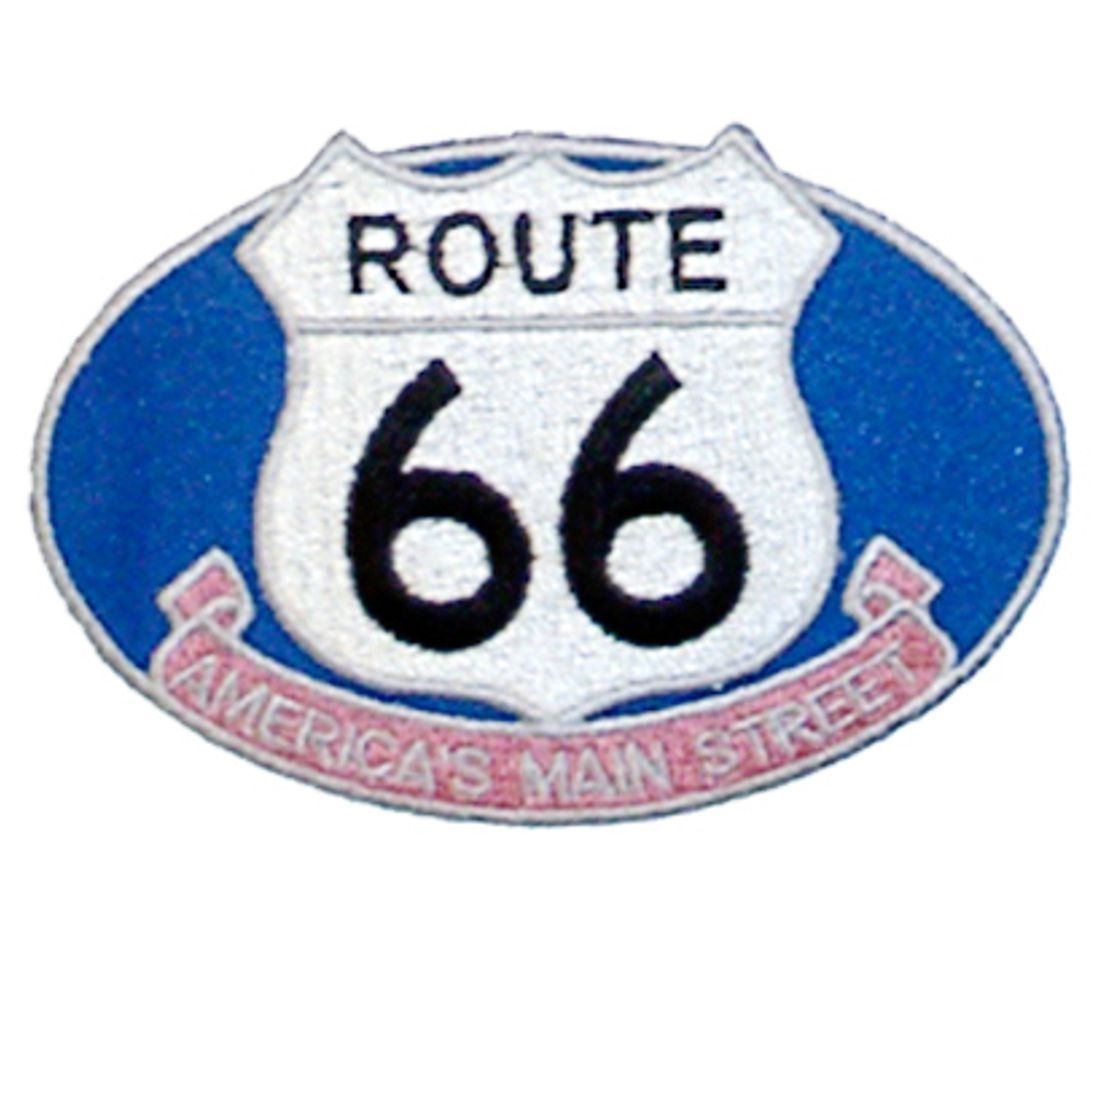 Aufnäher / Bügelpatch - Route 66, Main Street